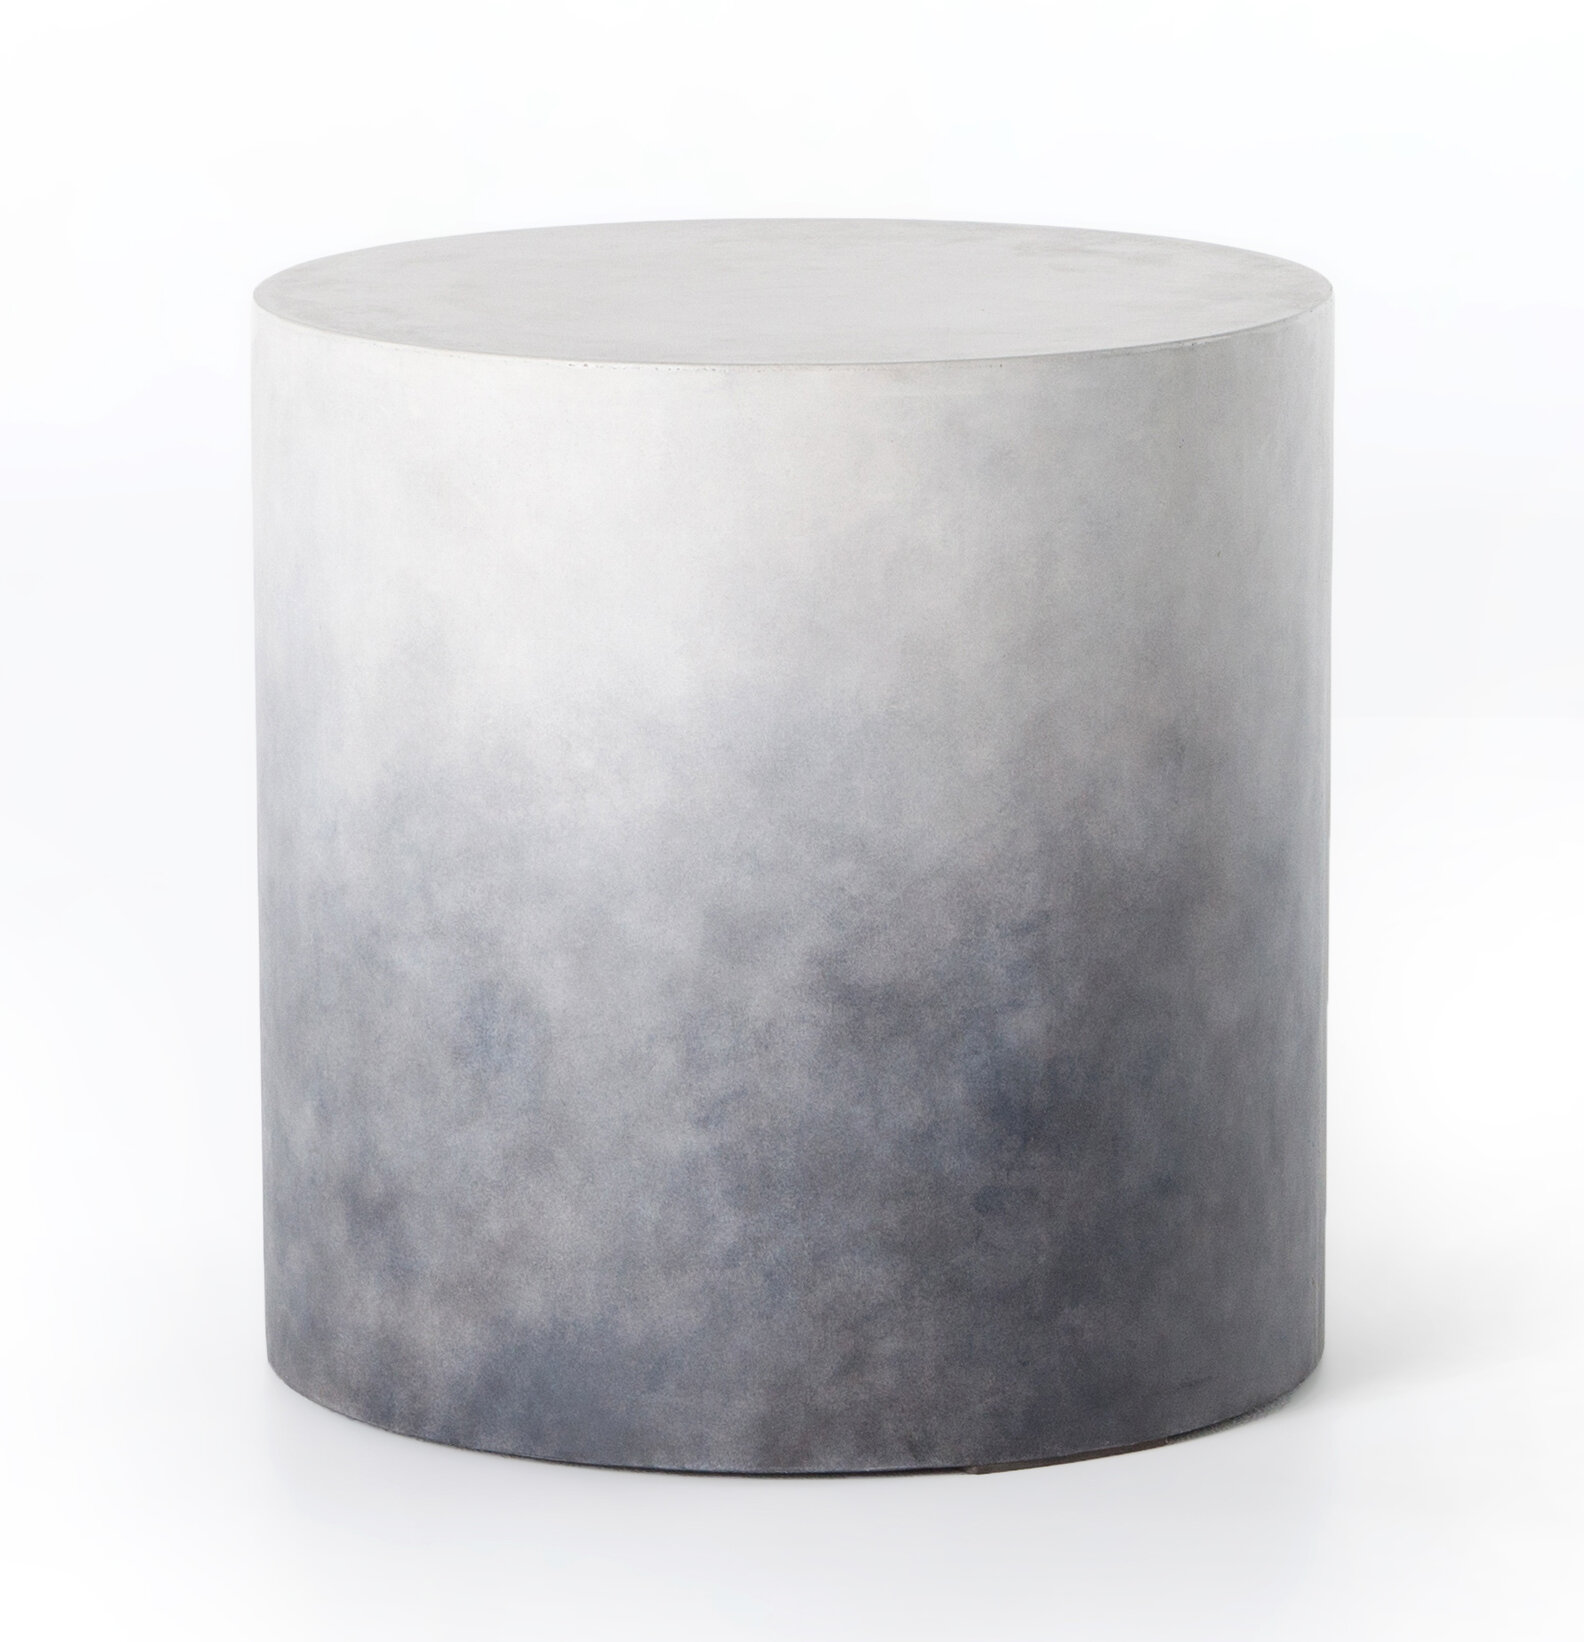 Allmodern Elise Concrete Side Table Wayfair